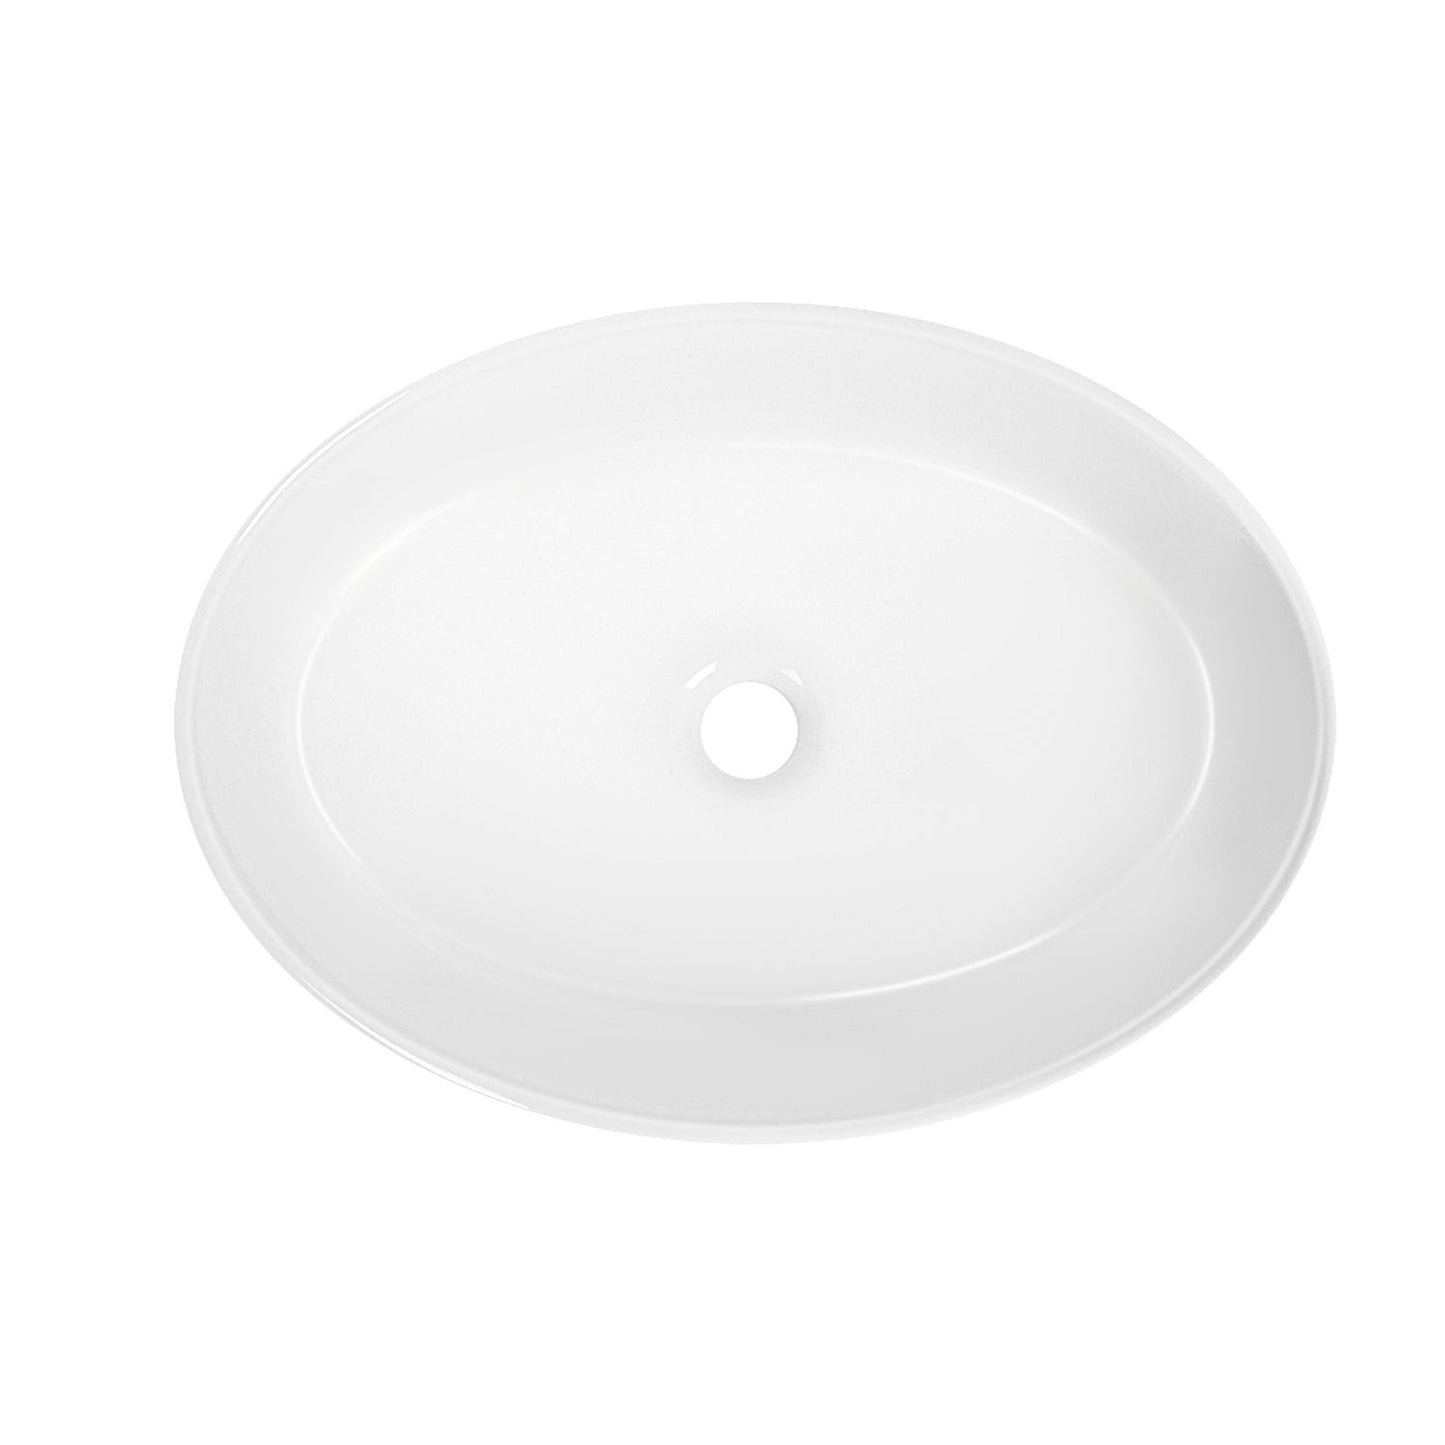 DeerValley Horizon 14" Oval White Vessel Bathroom Sink